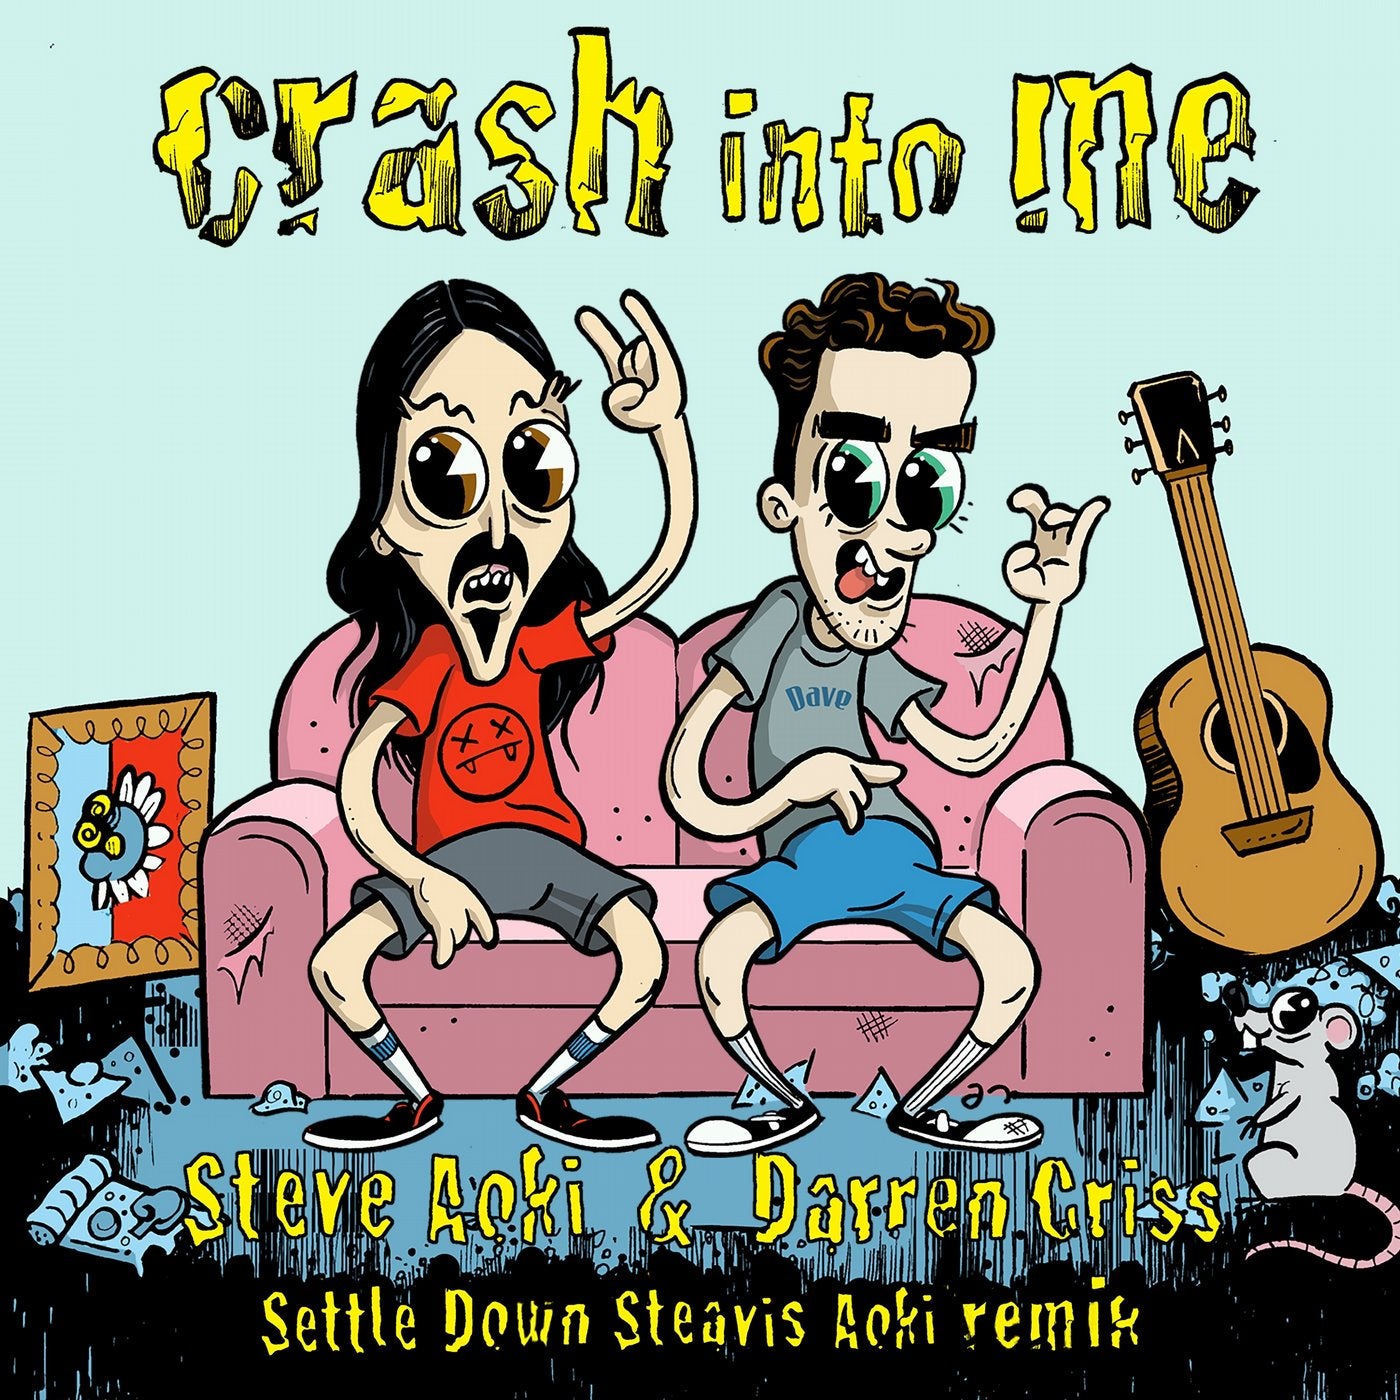 Crash Into Me - Settle Down Steavis Aoki Remix